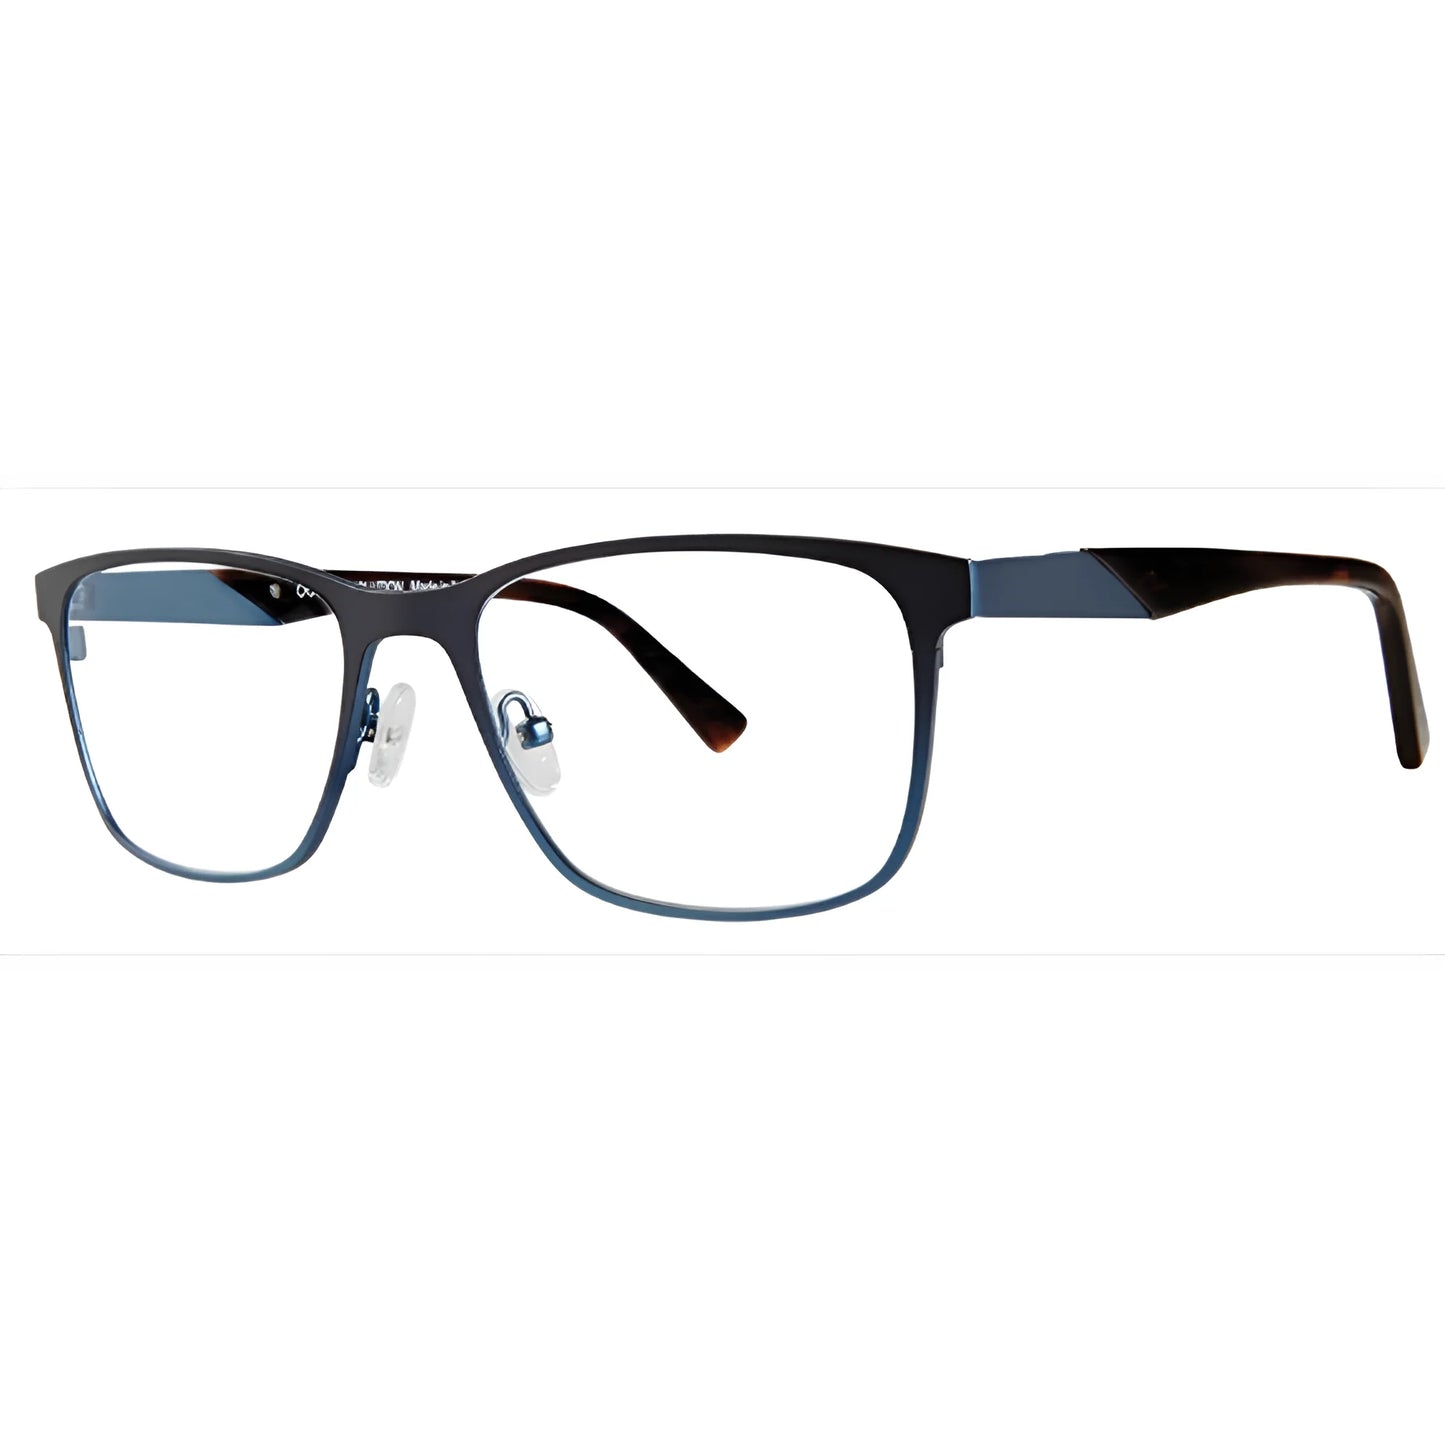 OGI 4325 Eyeglasses